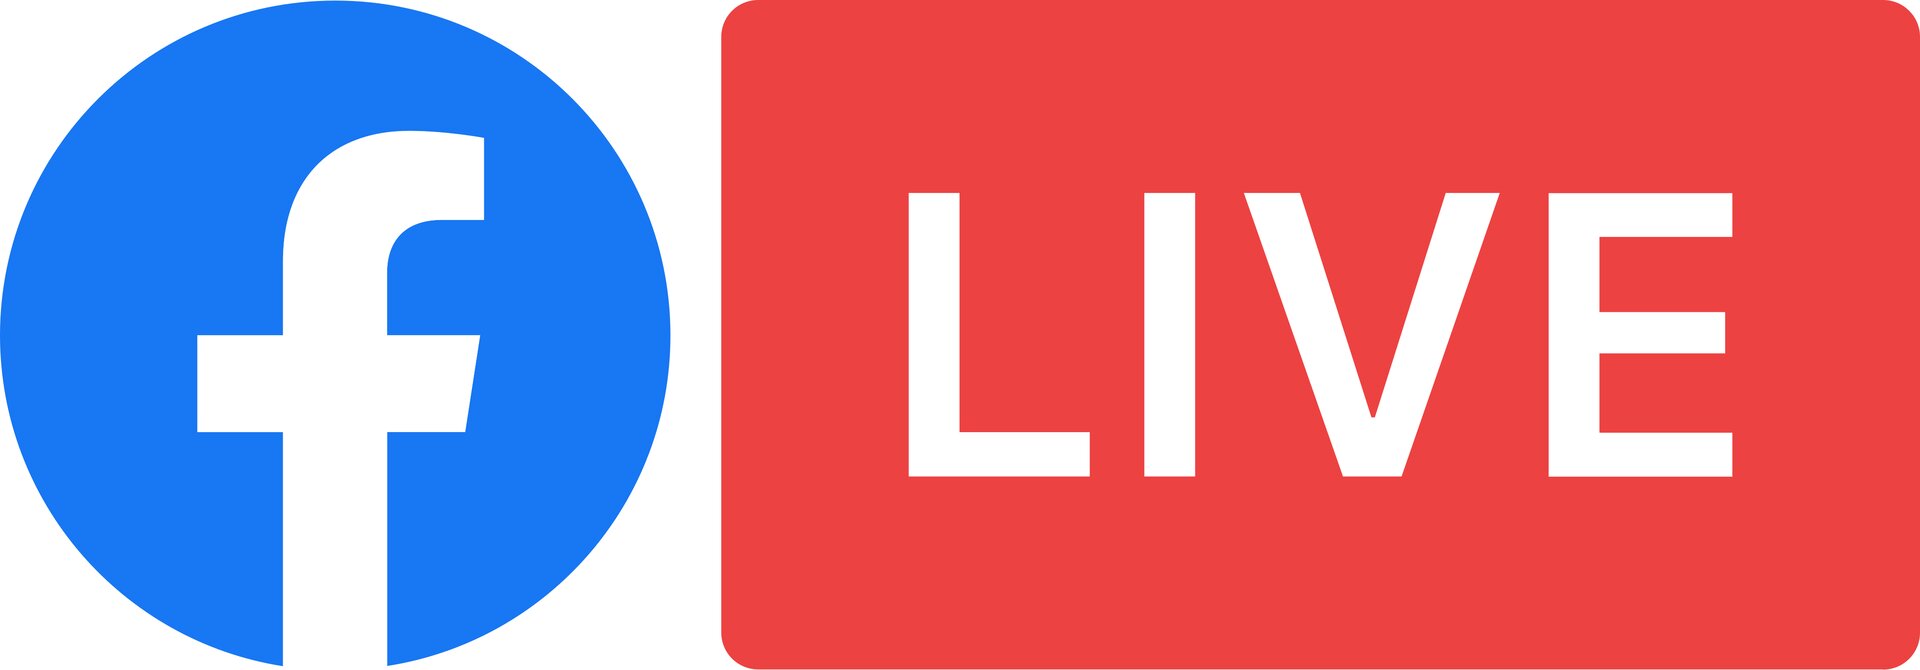 facebook live logo OK